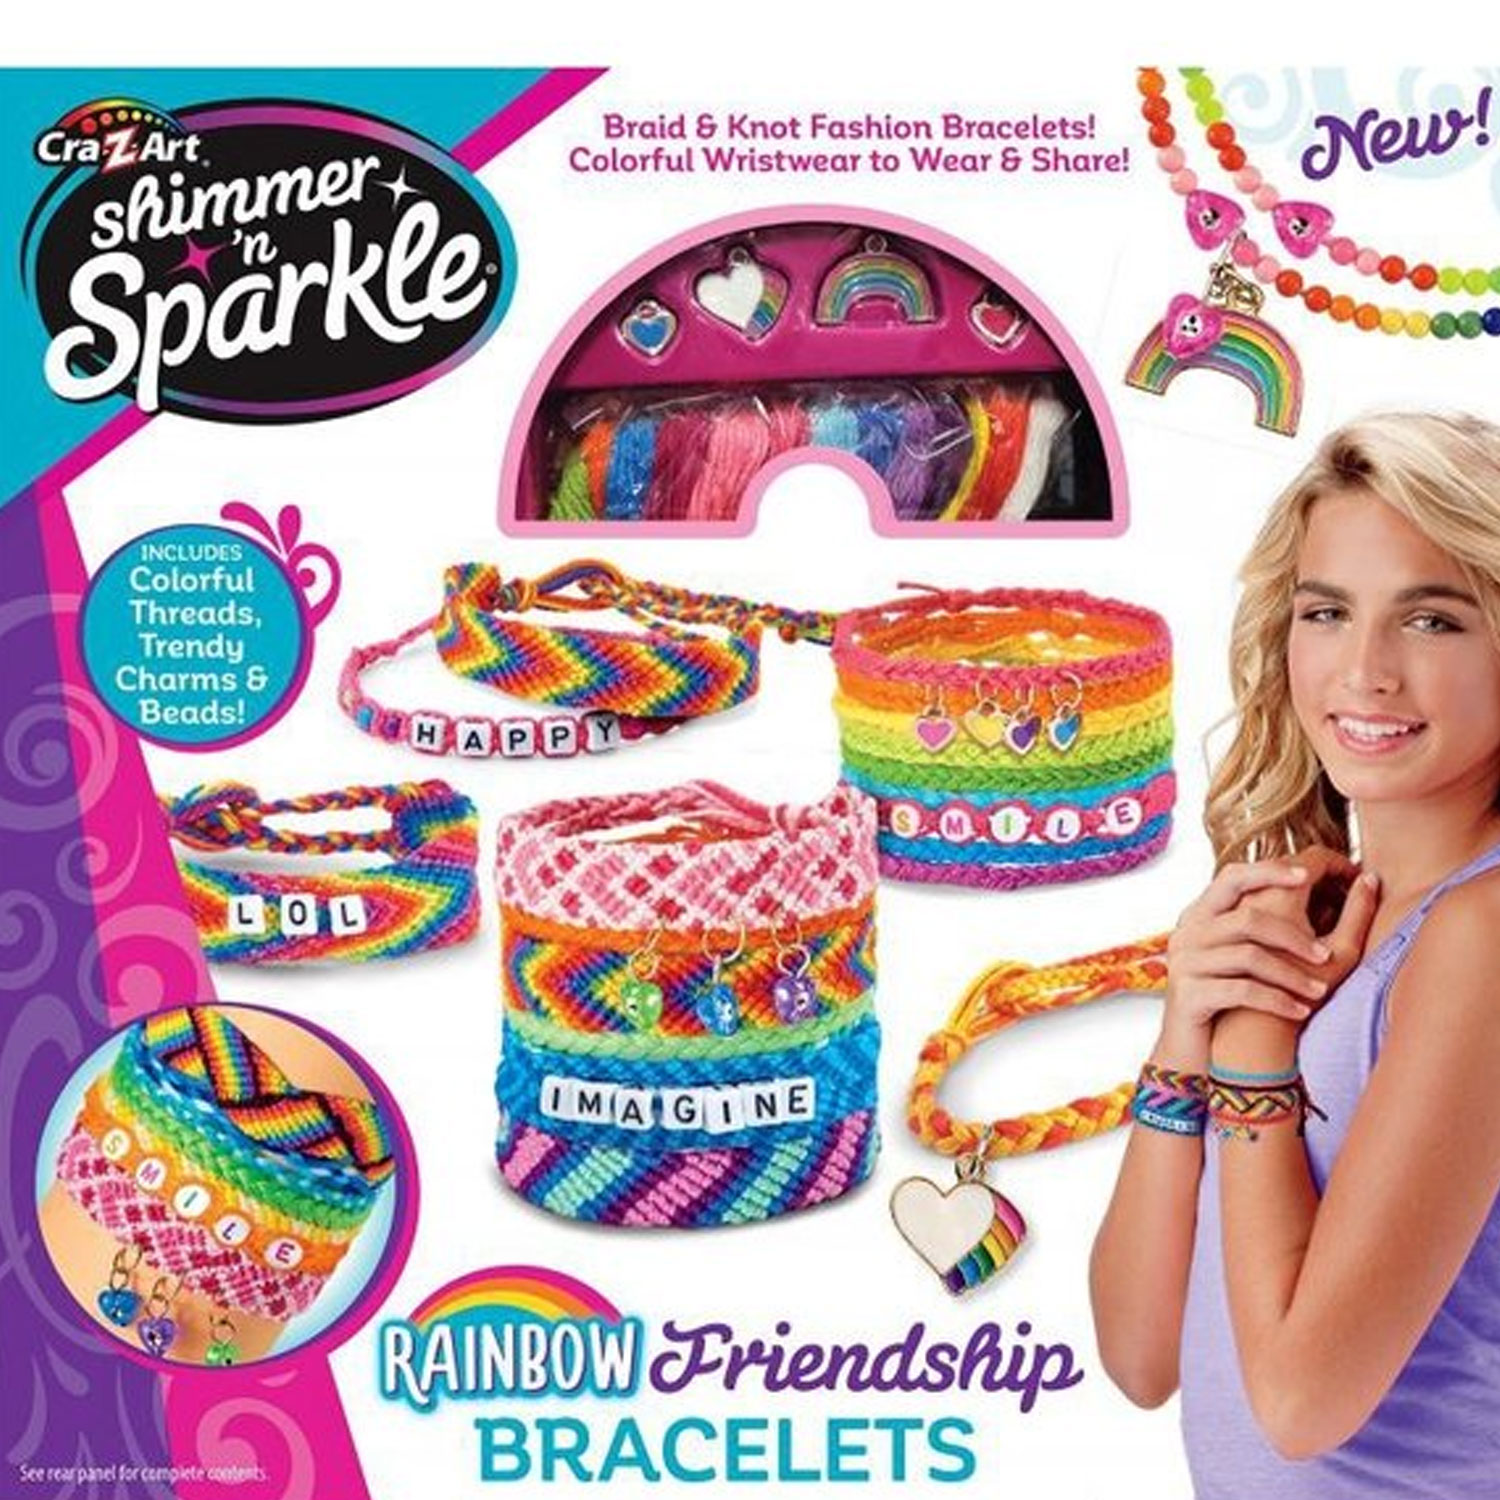 Shimmer N Sparkle Make Your Own Sparkle Over The Rainbow Friendship Bracelet Kit